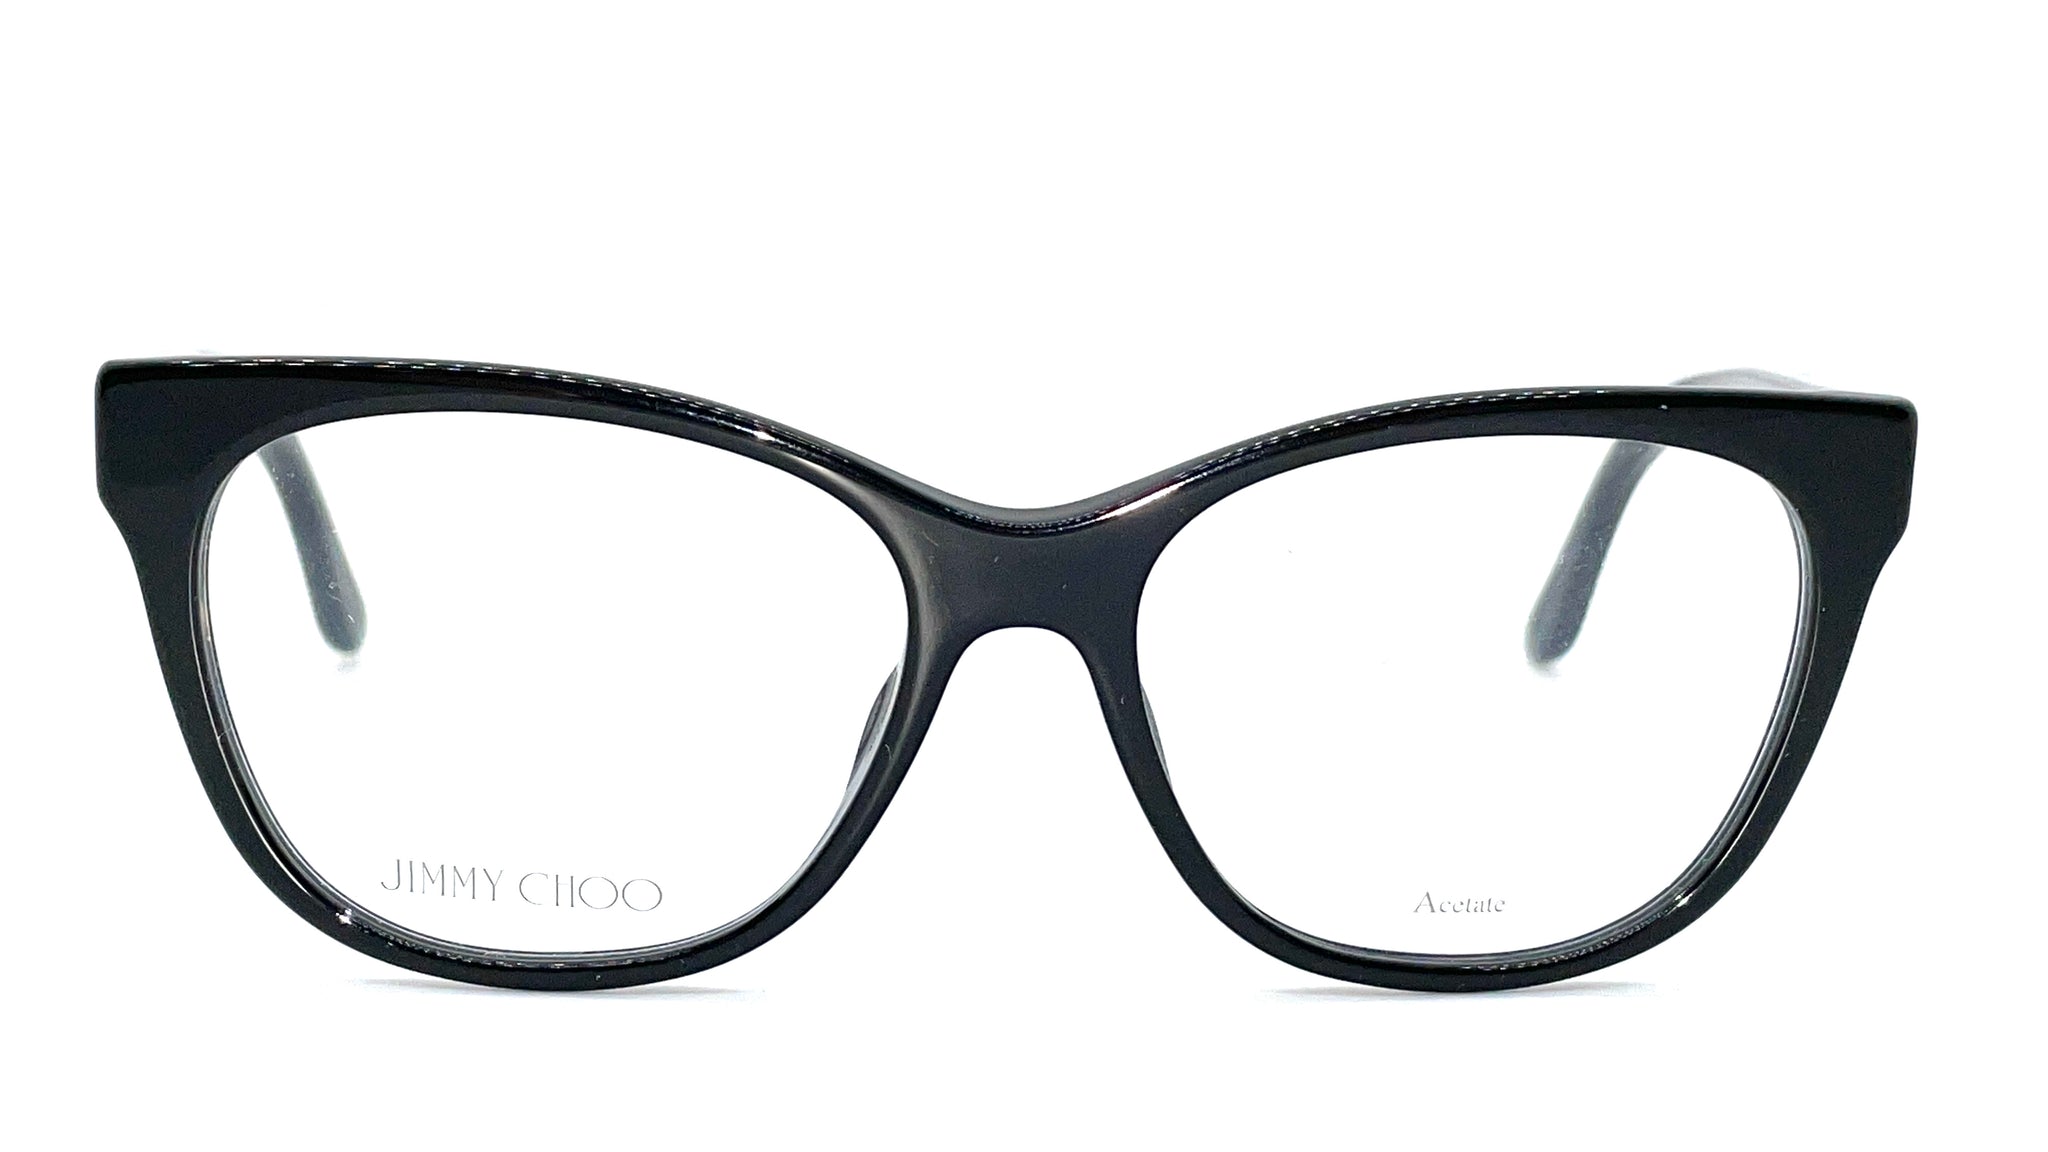 Jimmy Choo Eyewear - The Optician